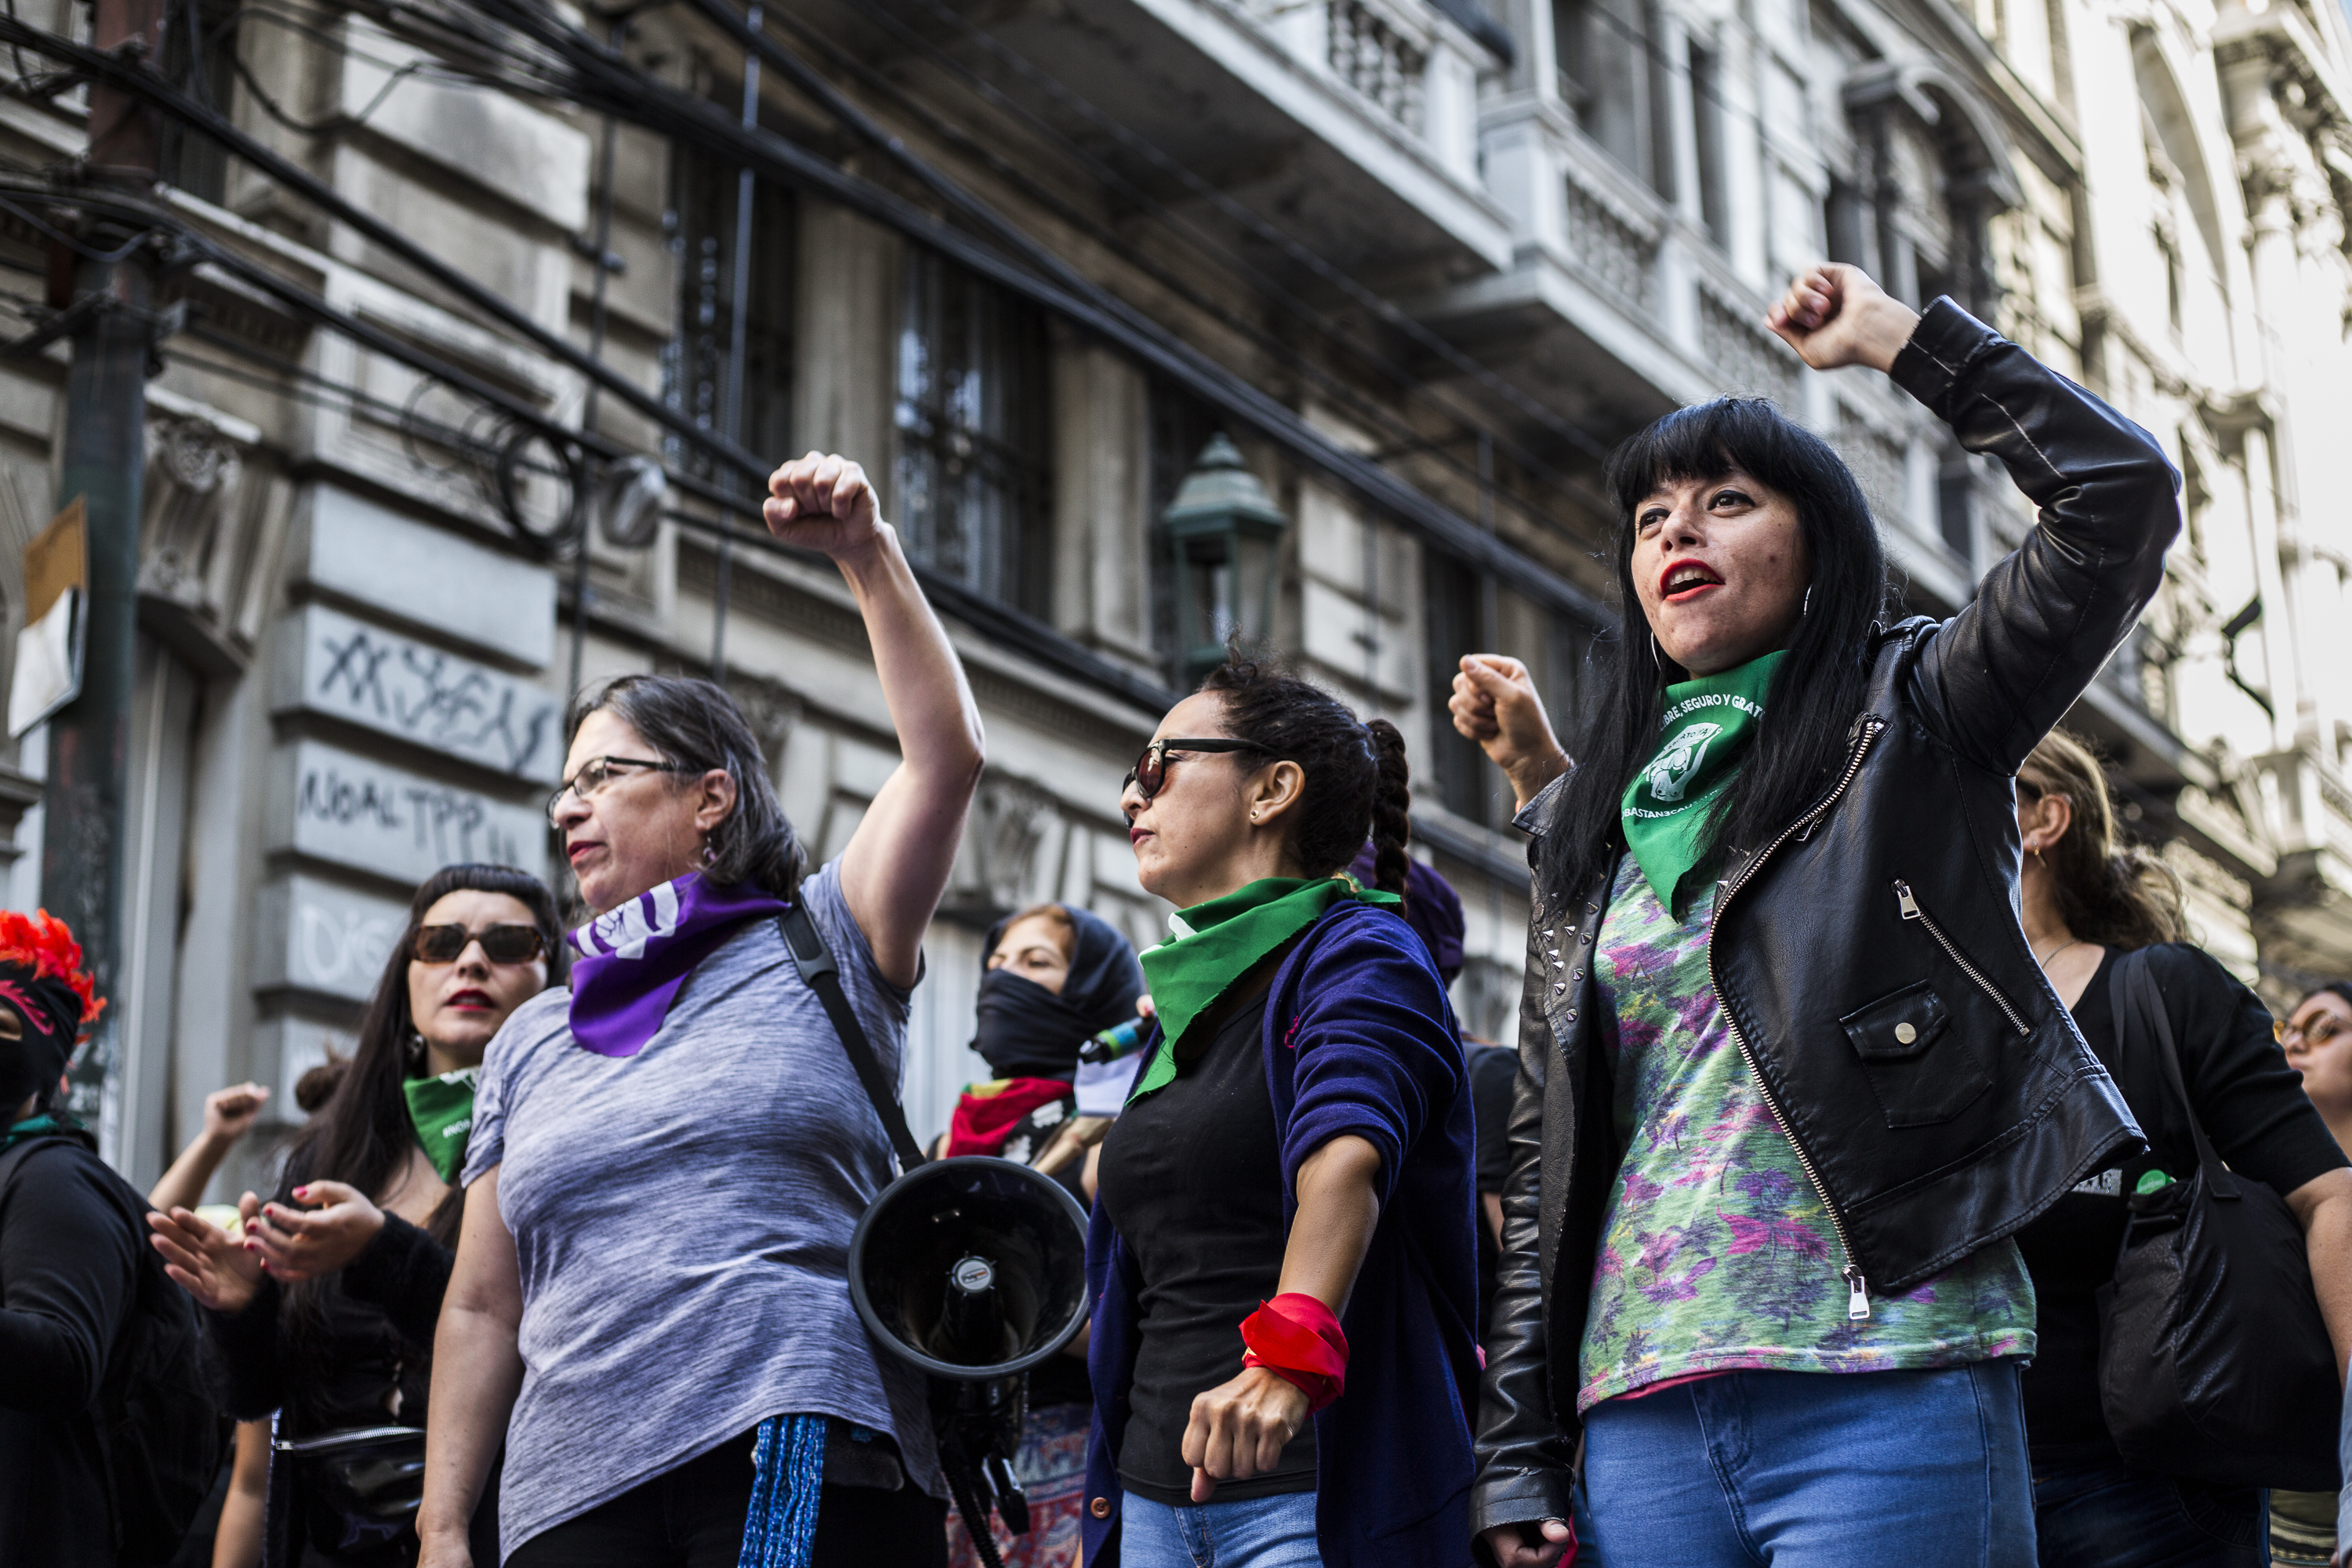 Valparaiso: Marcha Feminista M8